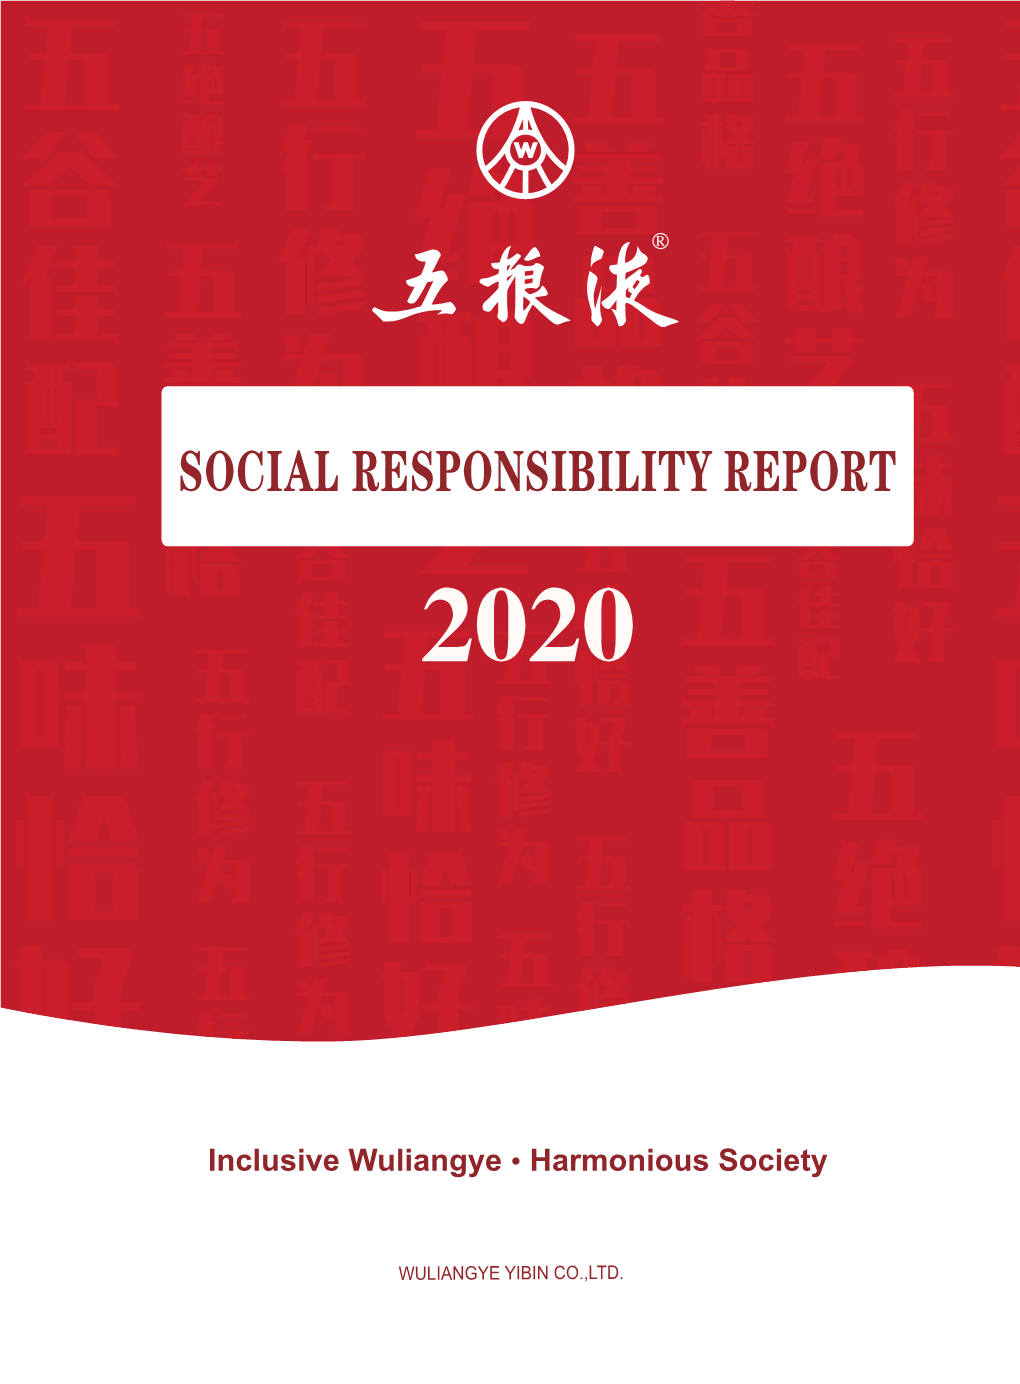 Inclusive Wuliangye Harmonious Society